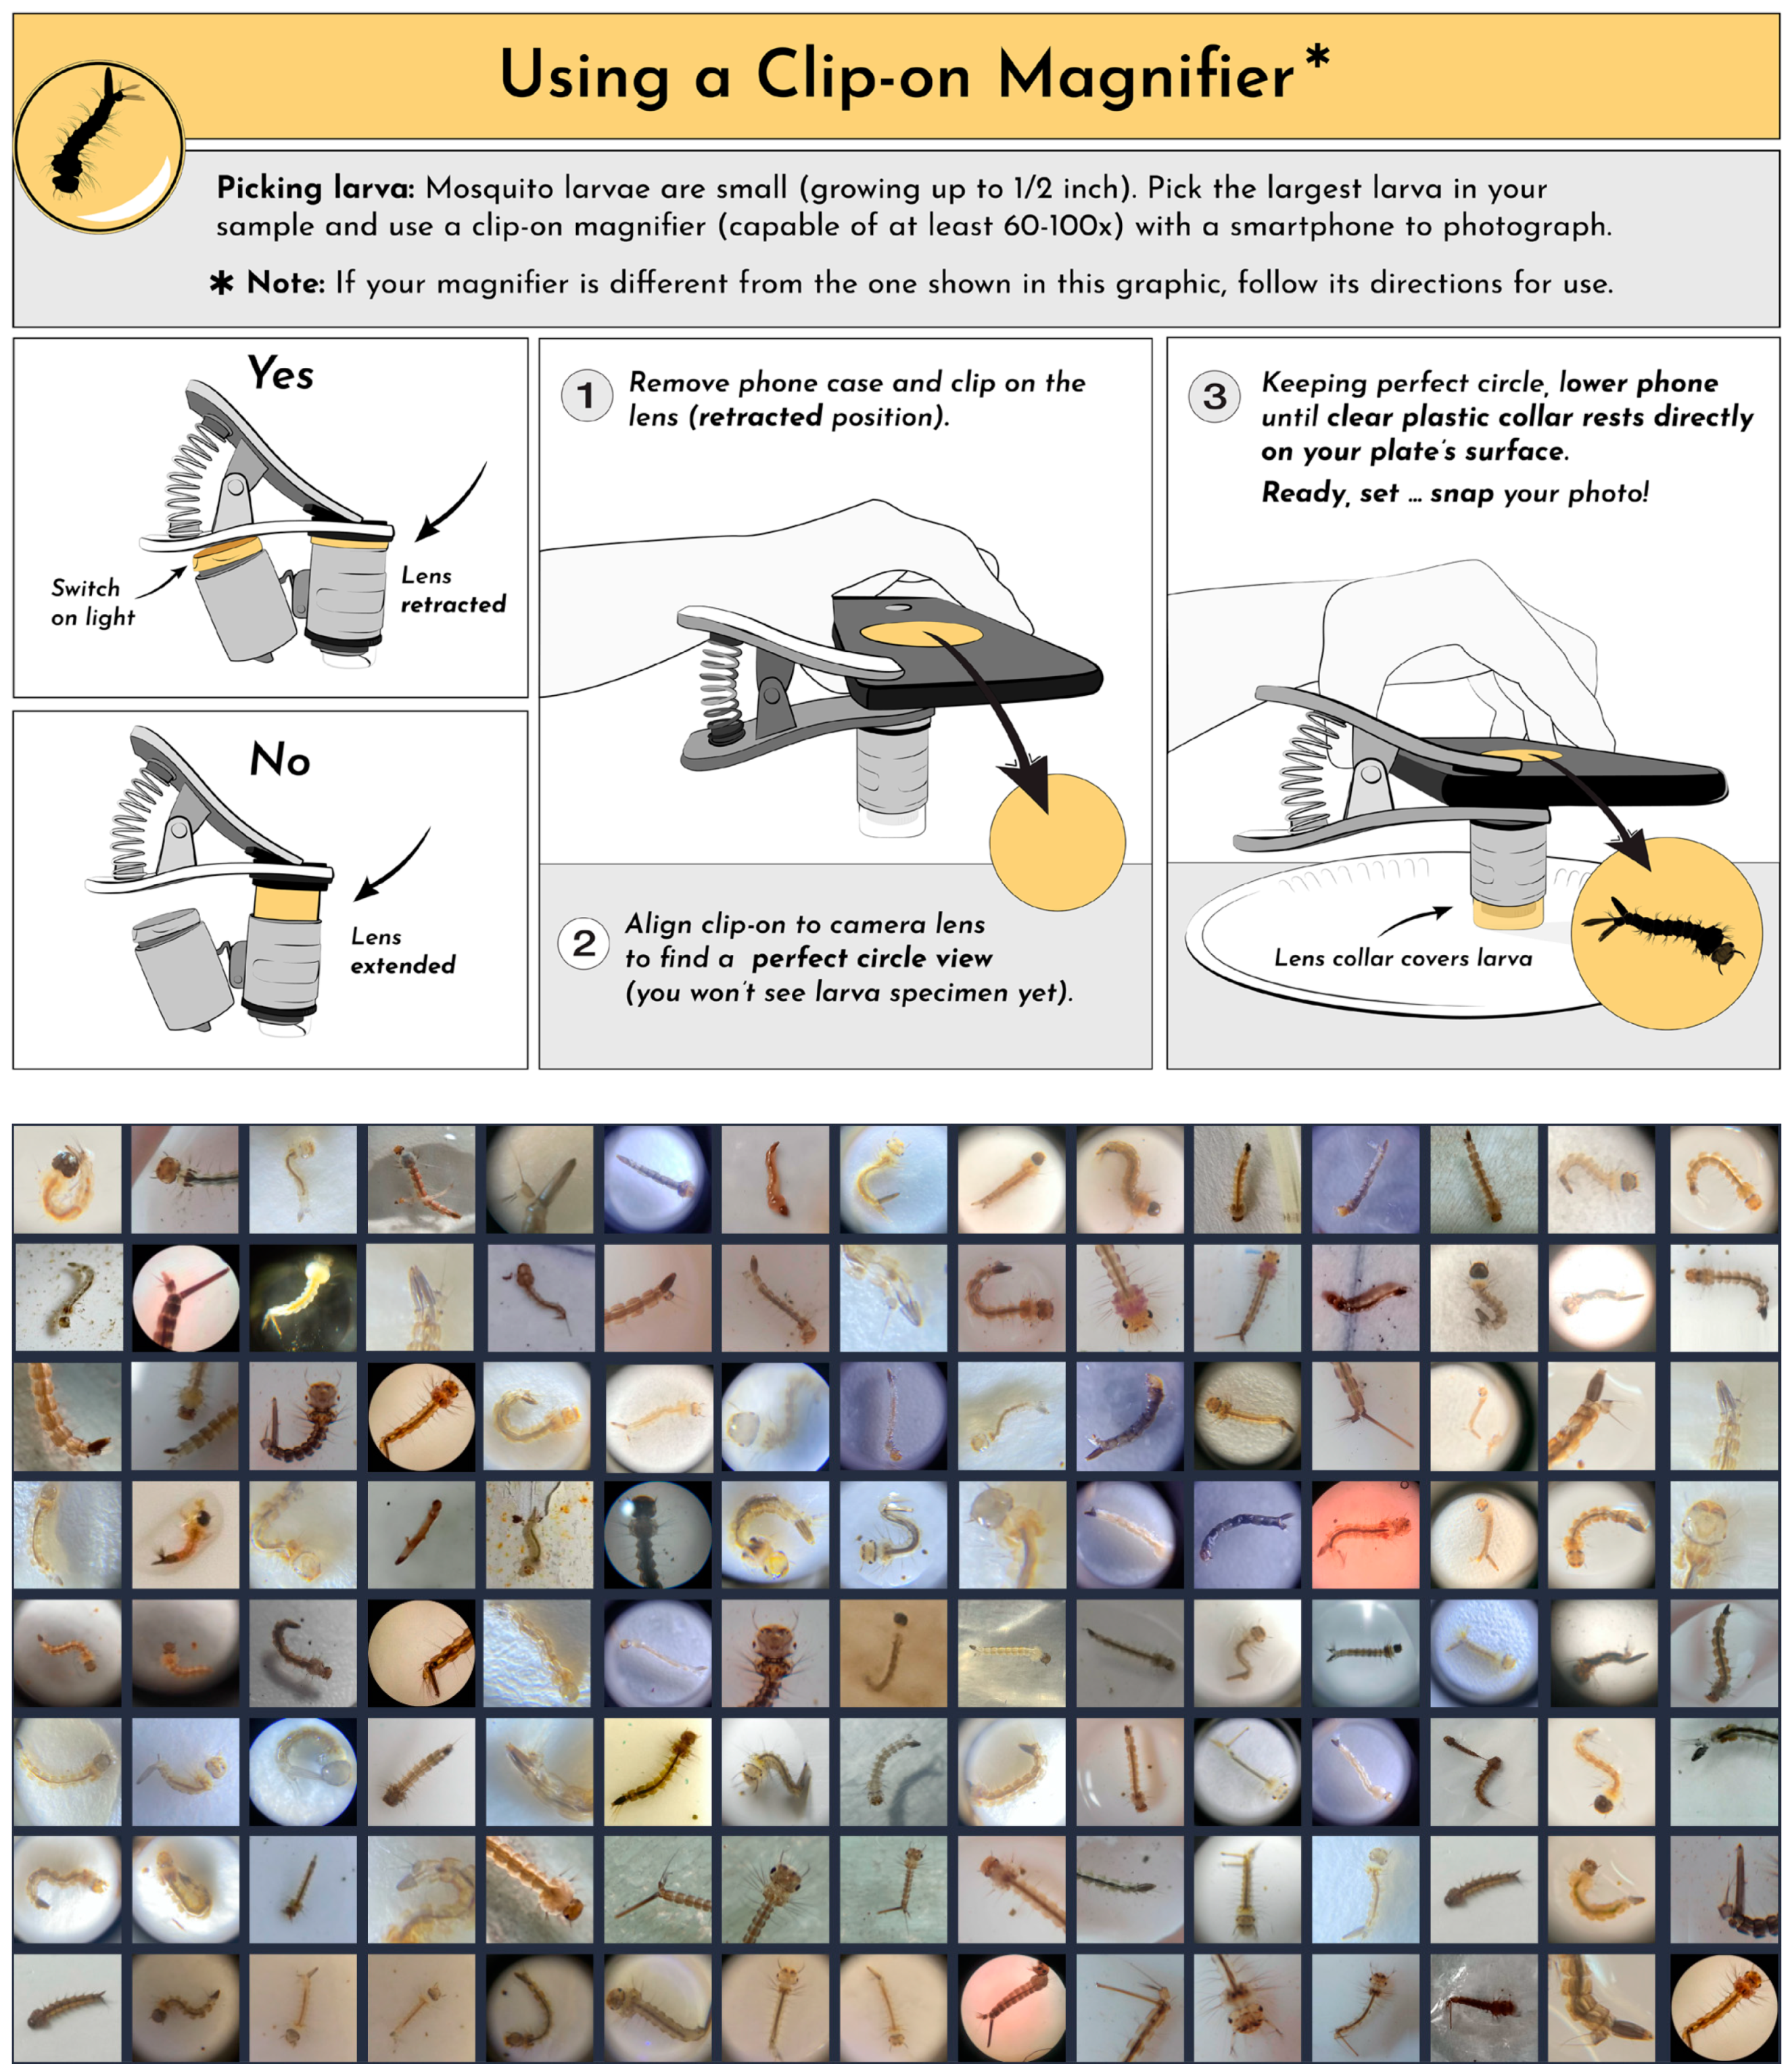 Images from The GLOBE Program’s app, Mosquito Habitat Mapper’s 2021 Mosquito Habitat Photo Challenge.